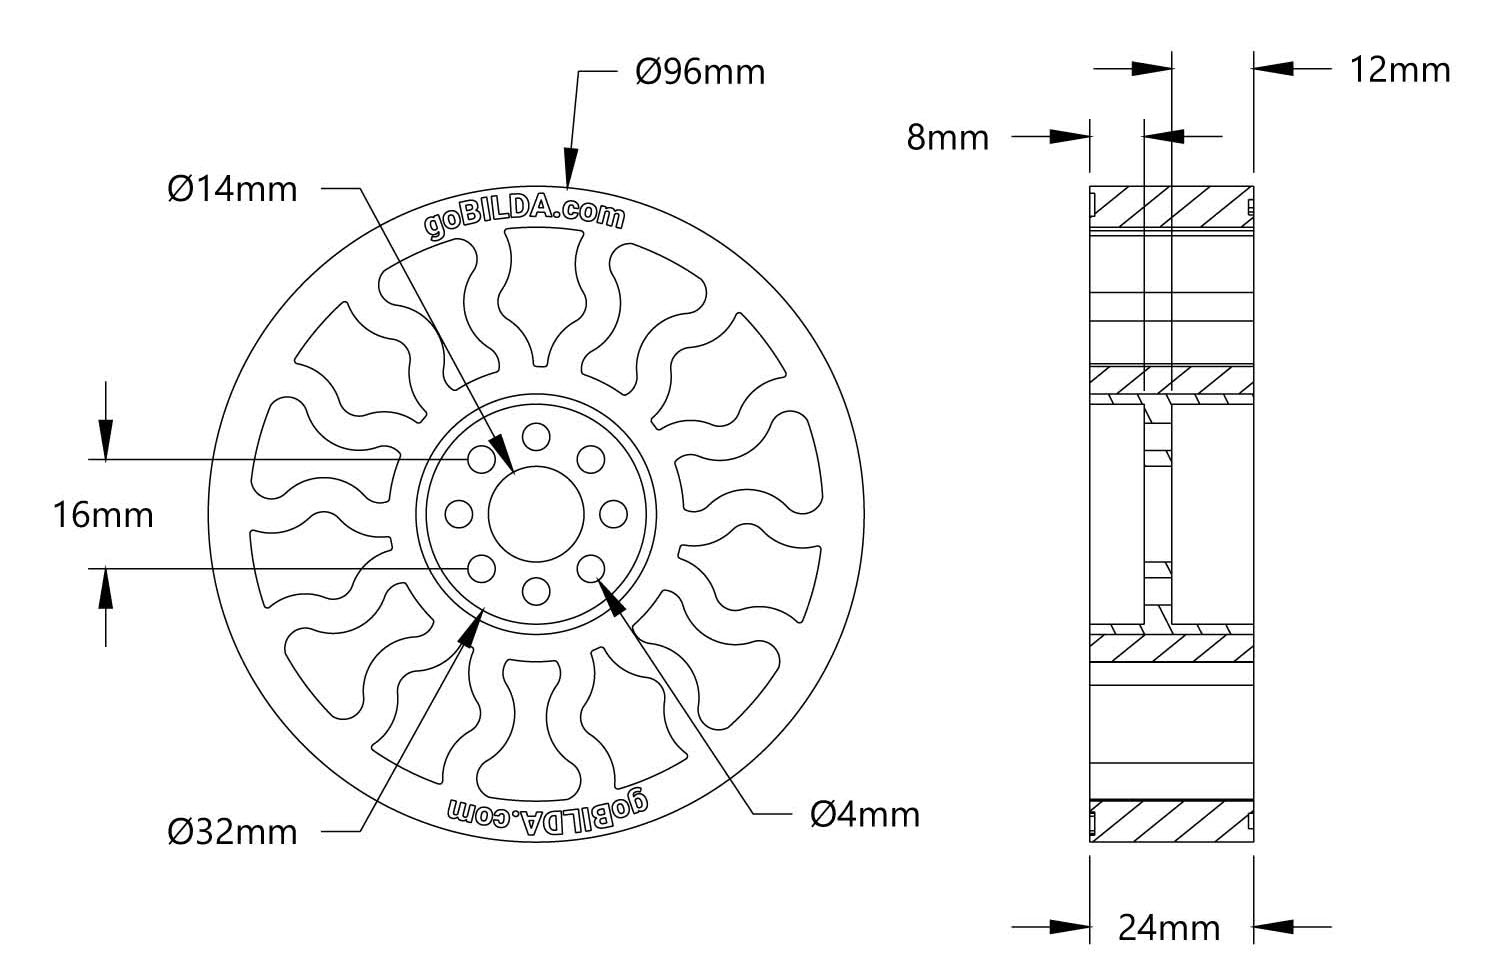 3613 Series Gecko Wheel (14mm Bore, 96mm Diameter) - Click to Enlarge